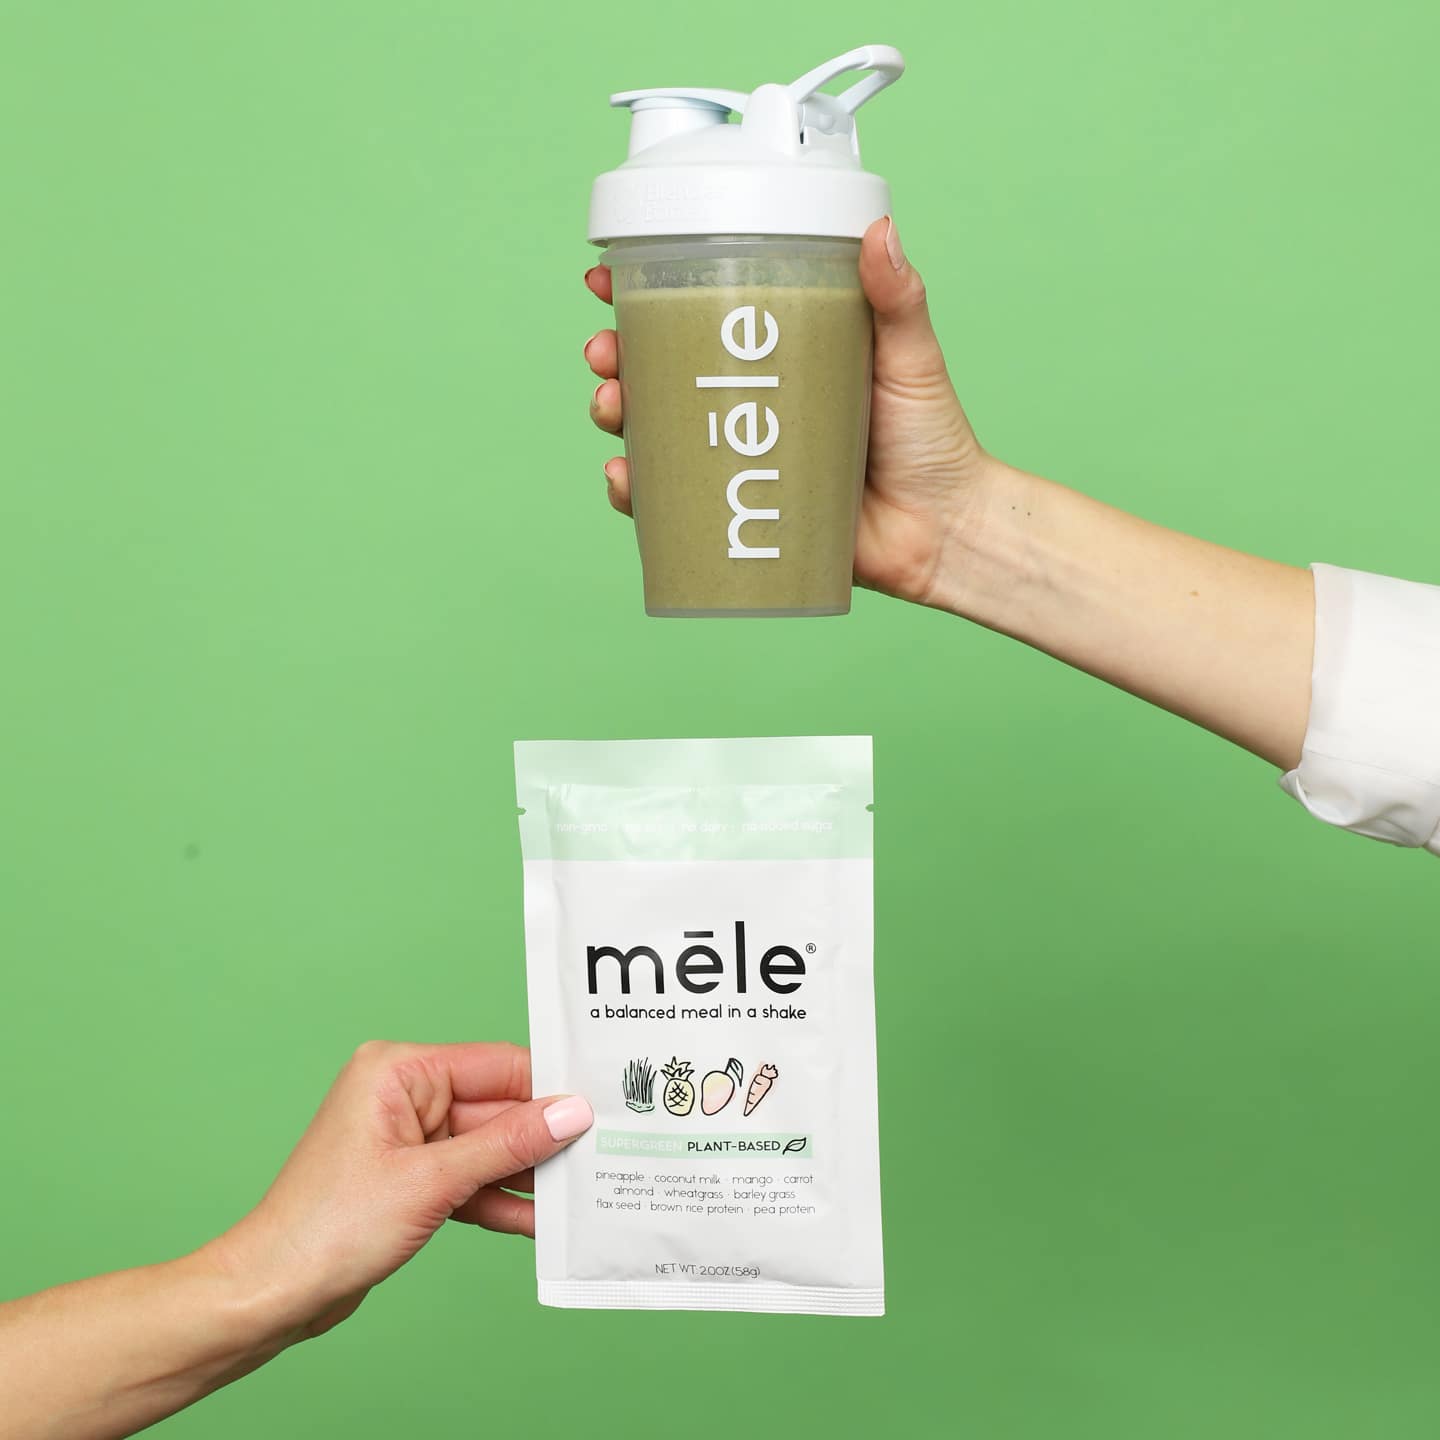 New Wellness Food Brand Mele Announces Launch | NOSH